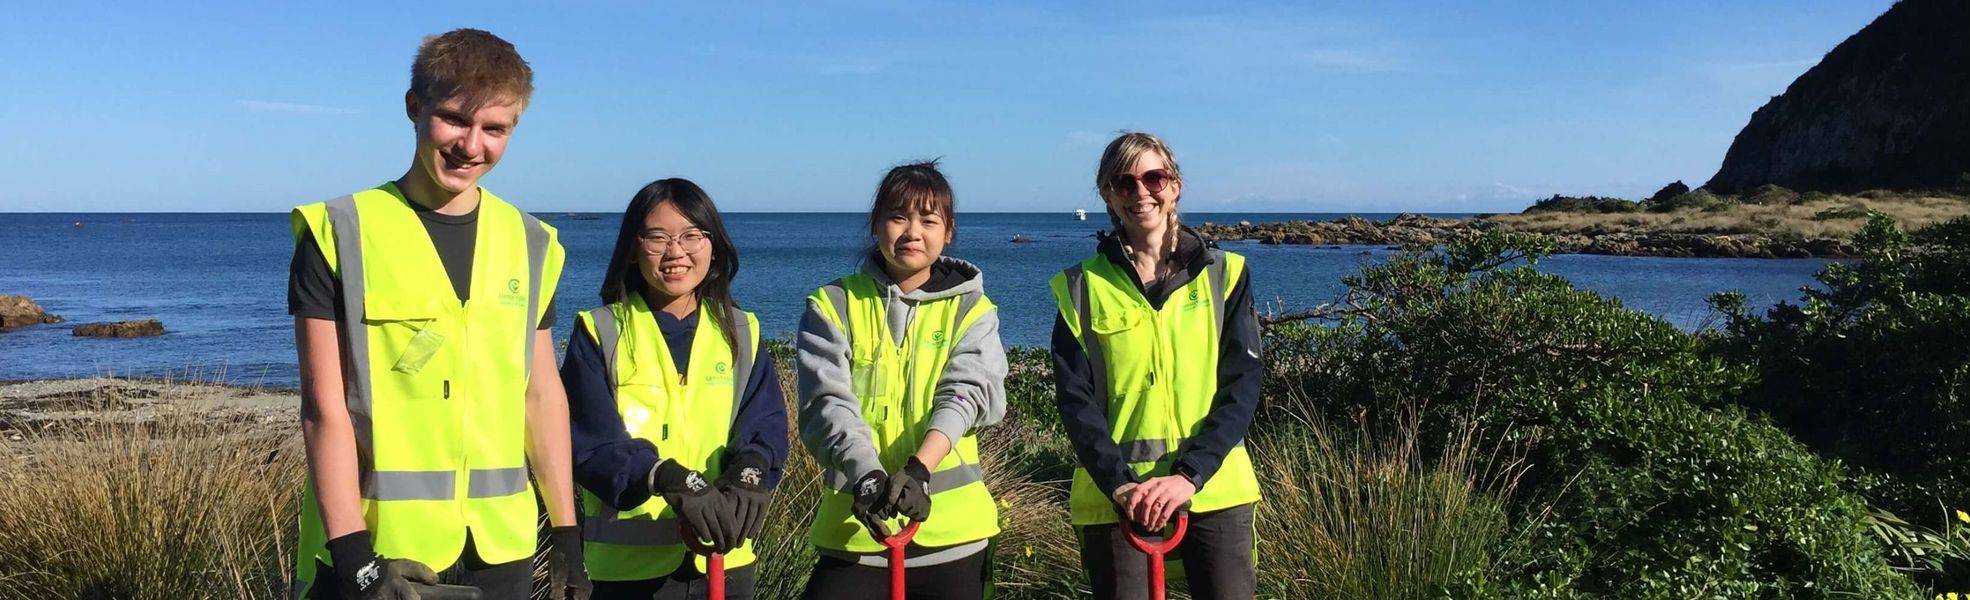 Volunteers bei ihrer Freiwilligenarbeit in Neuseeland